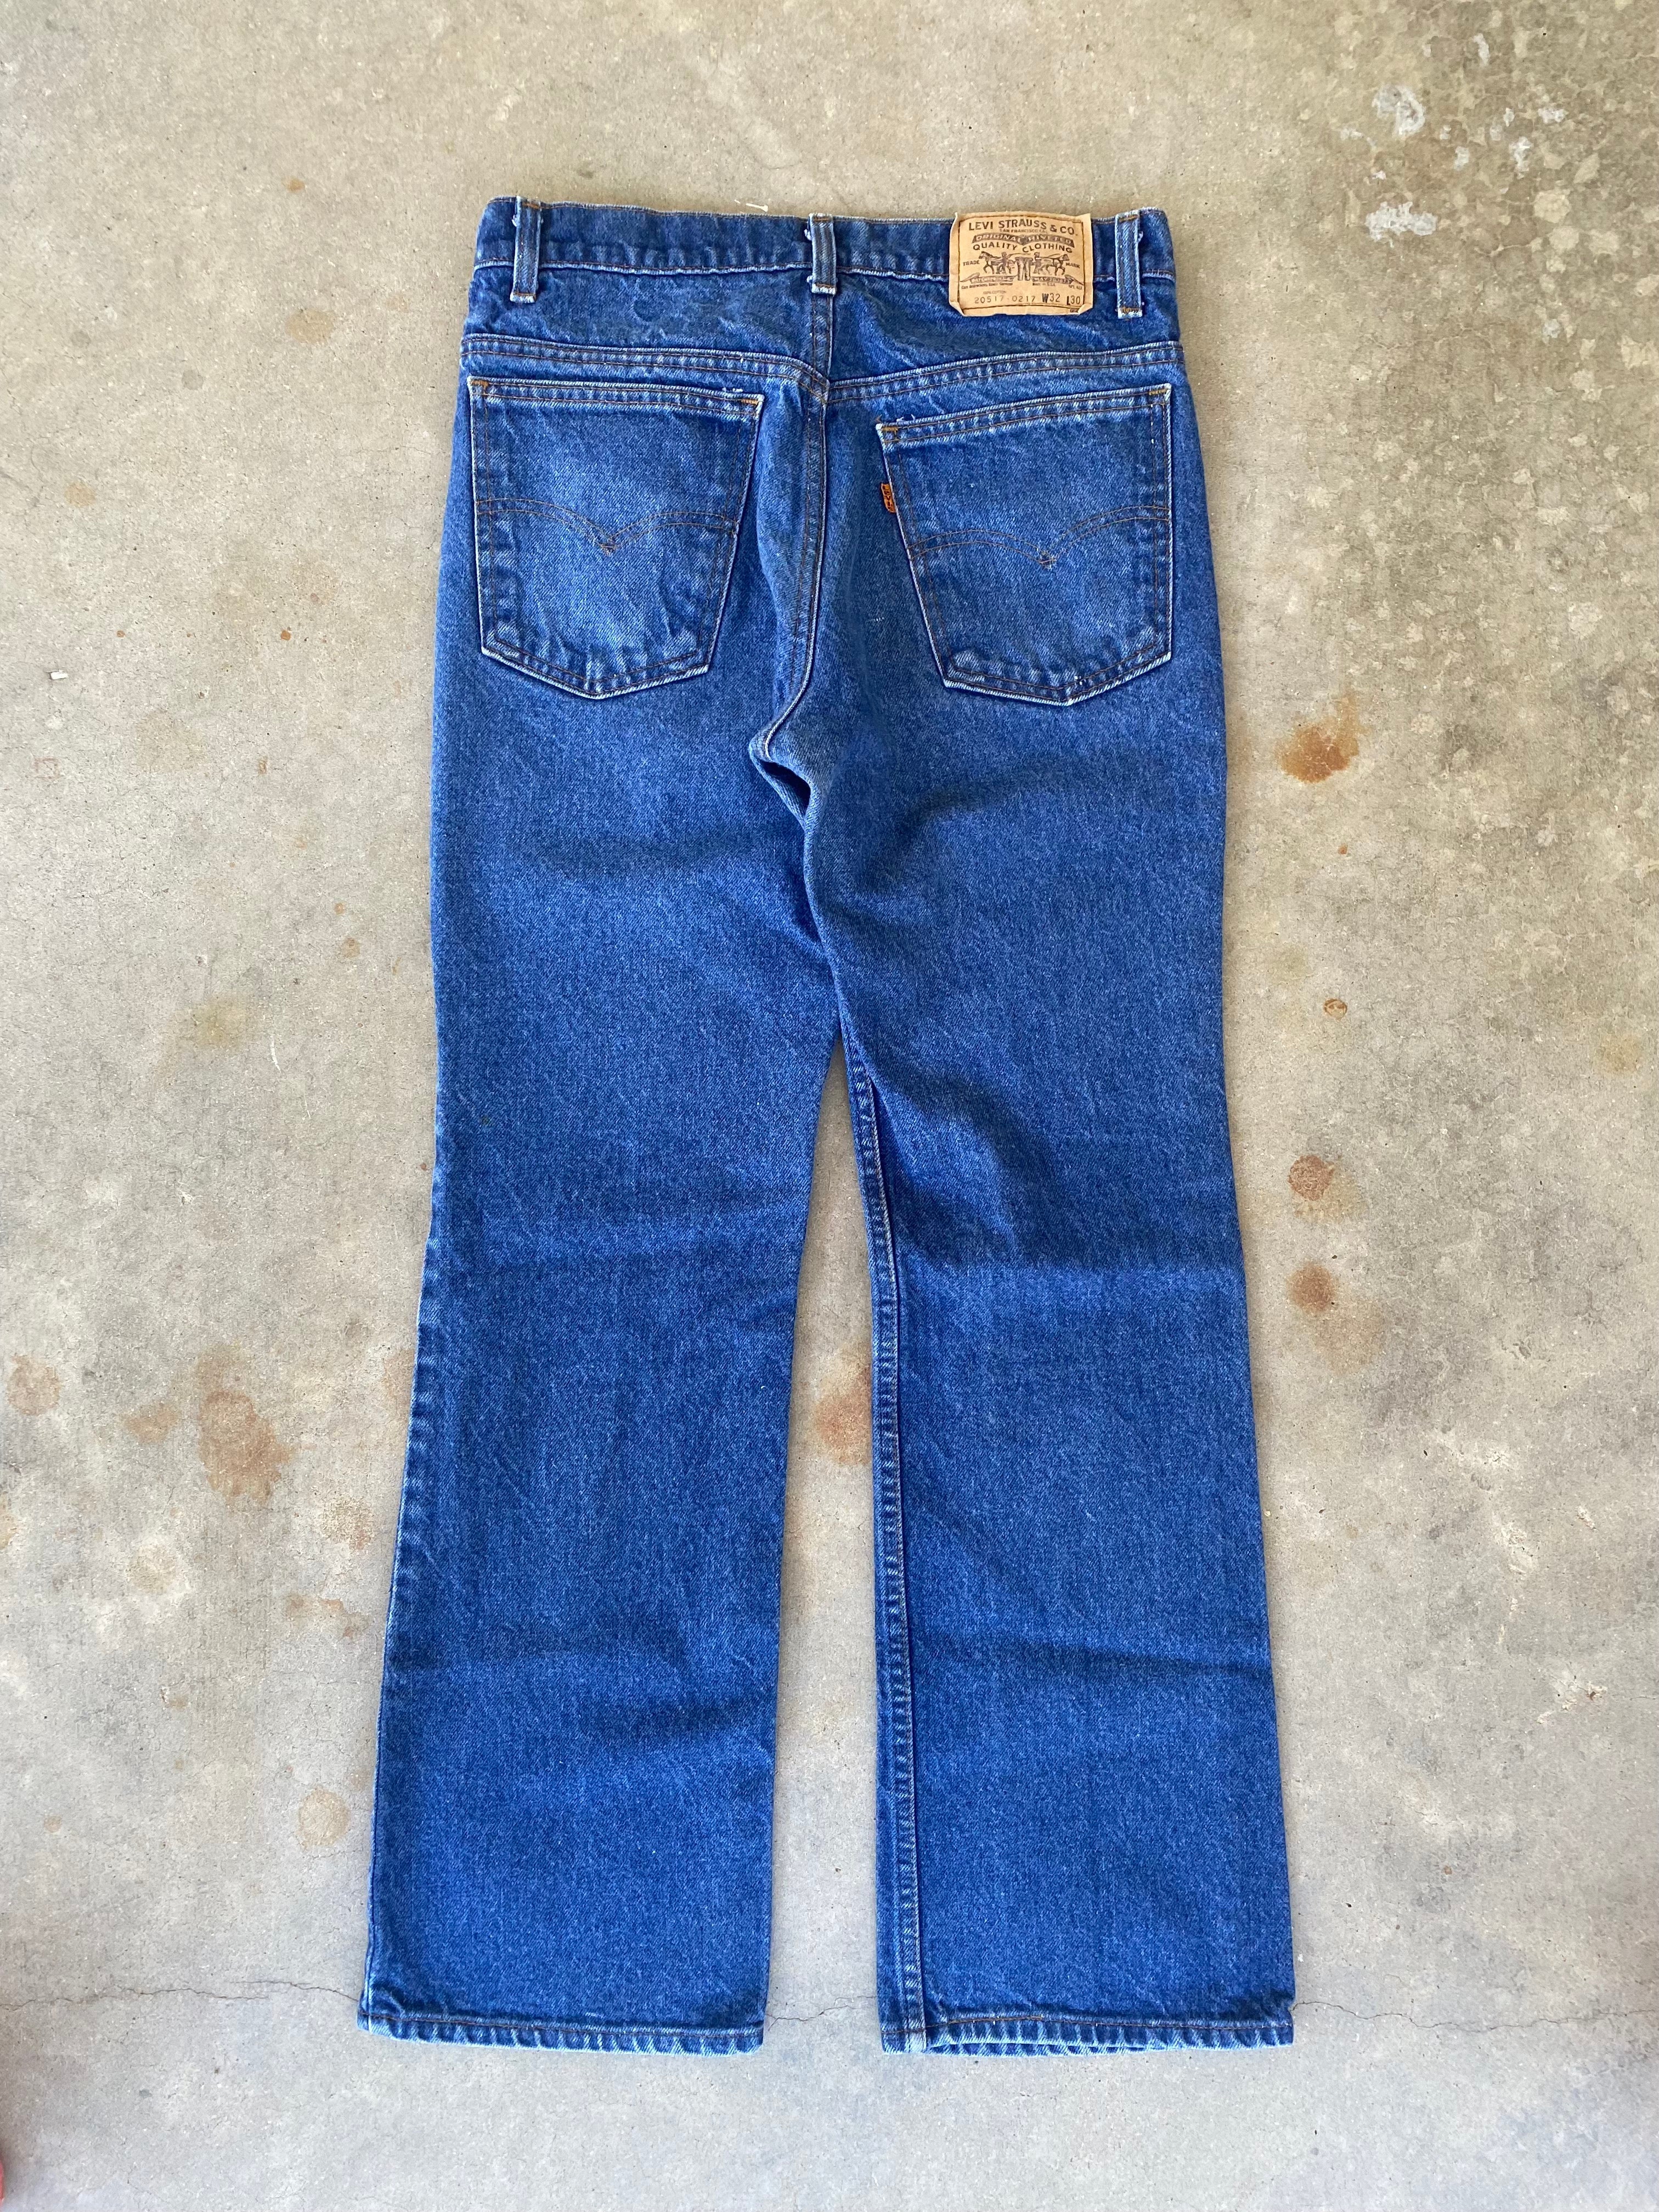 1980s Levi's 517 Orange Tab Boocut Flare Jeans (31"x29")